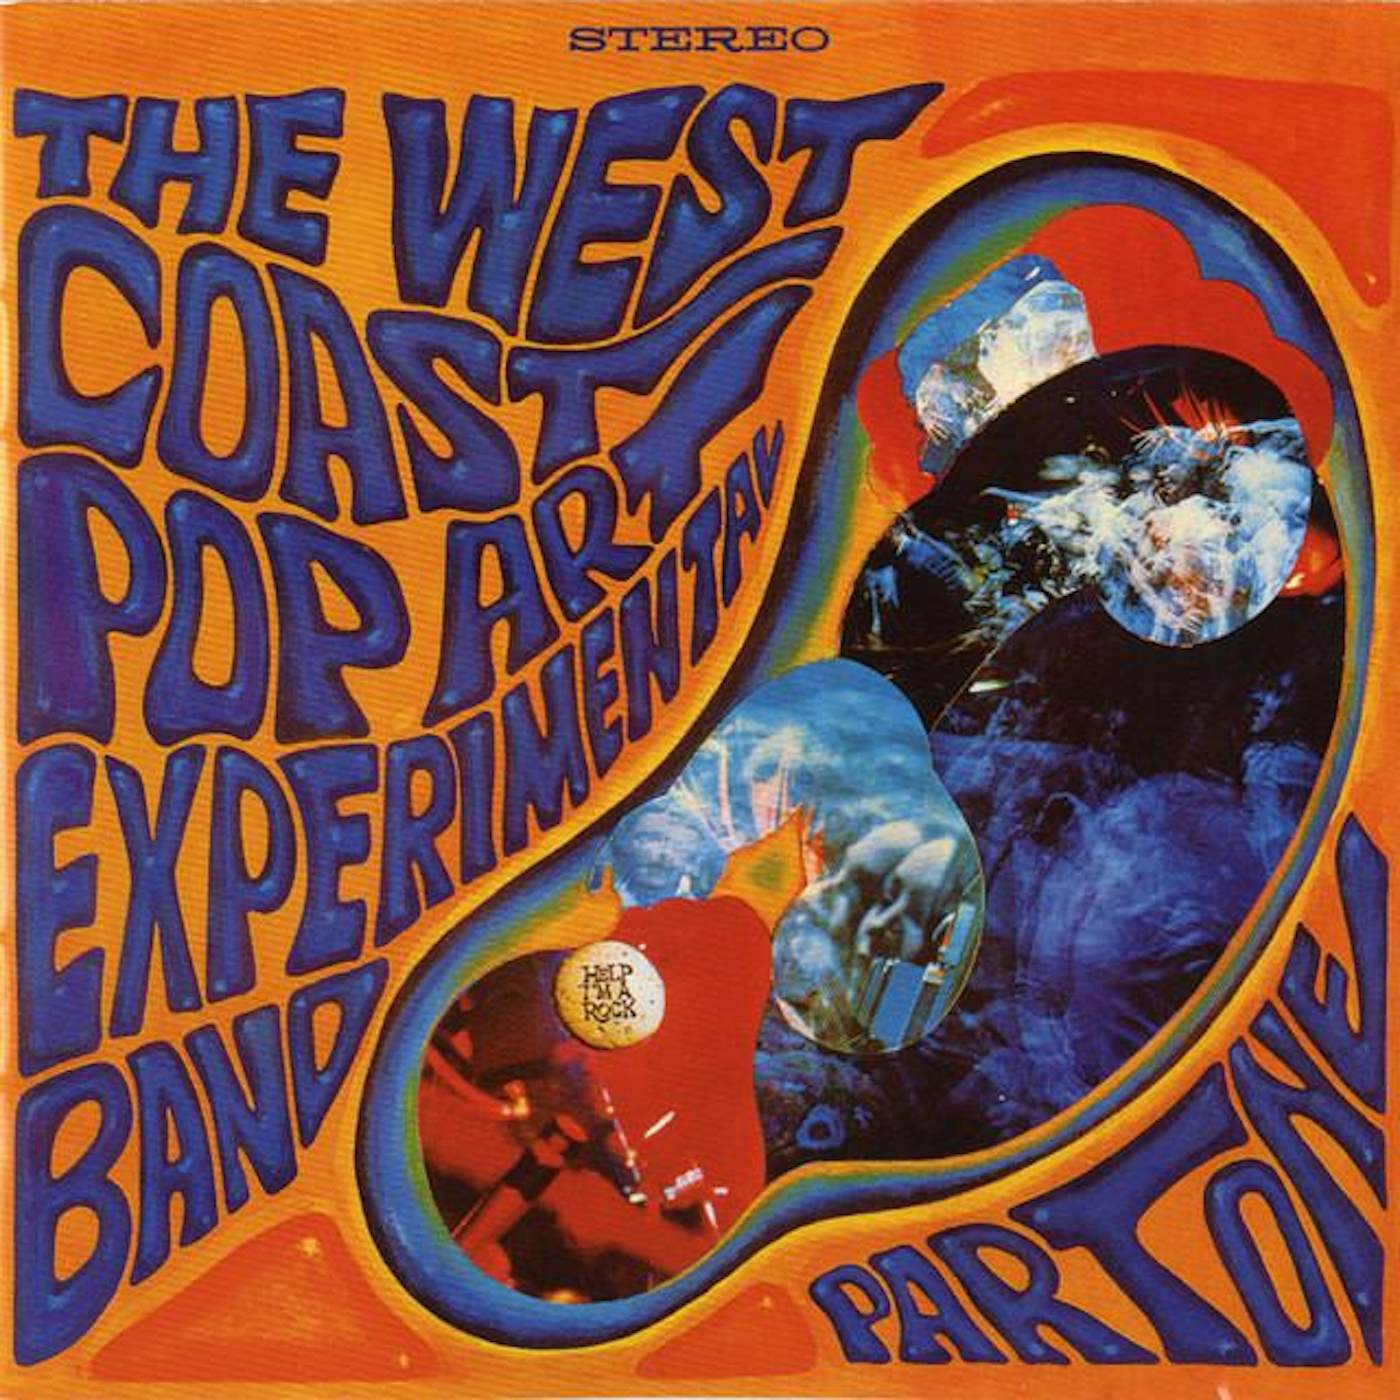 The West Coast Pop Art Experimental Band